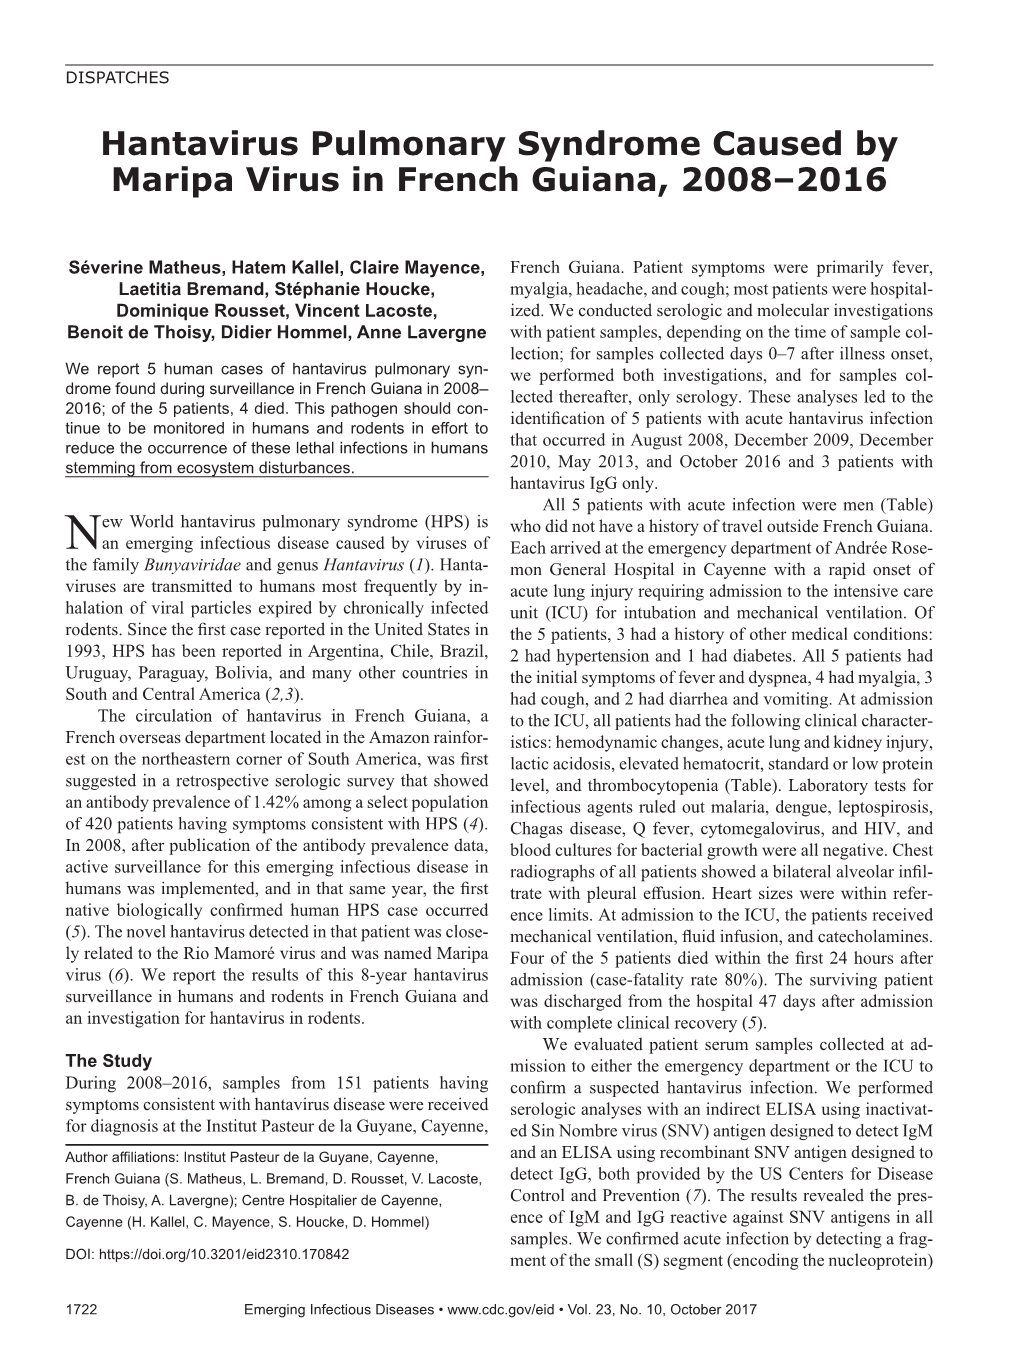 Hantavirus Pulmonary Syndrome Caused by Maripa Virus in French Guiana, 2008–2016